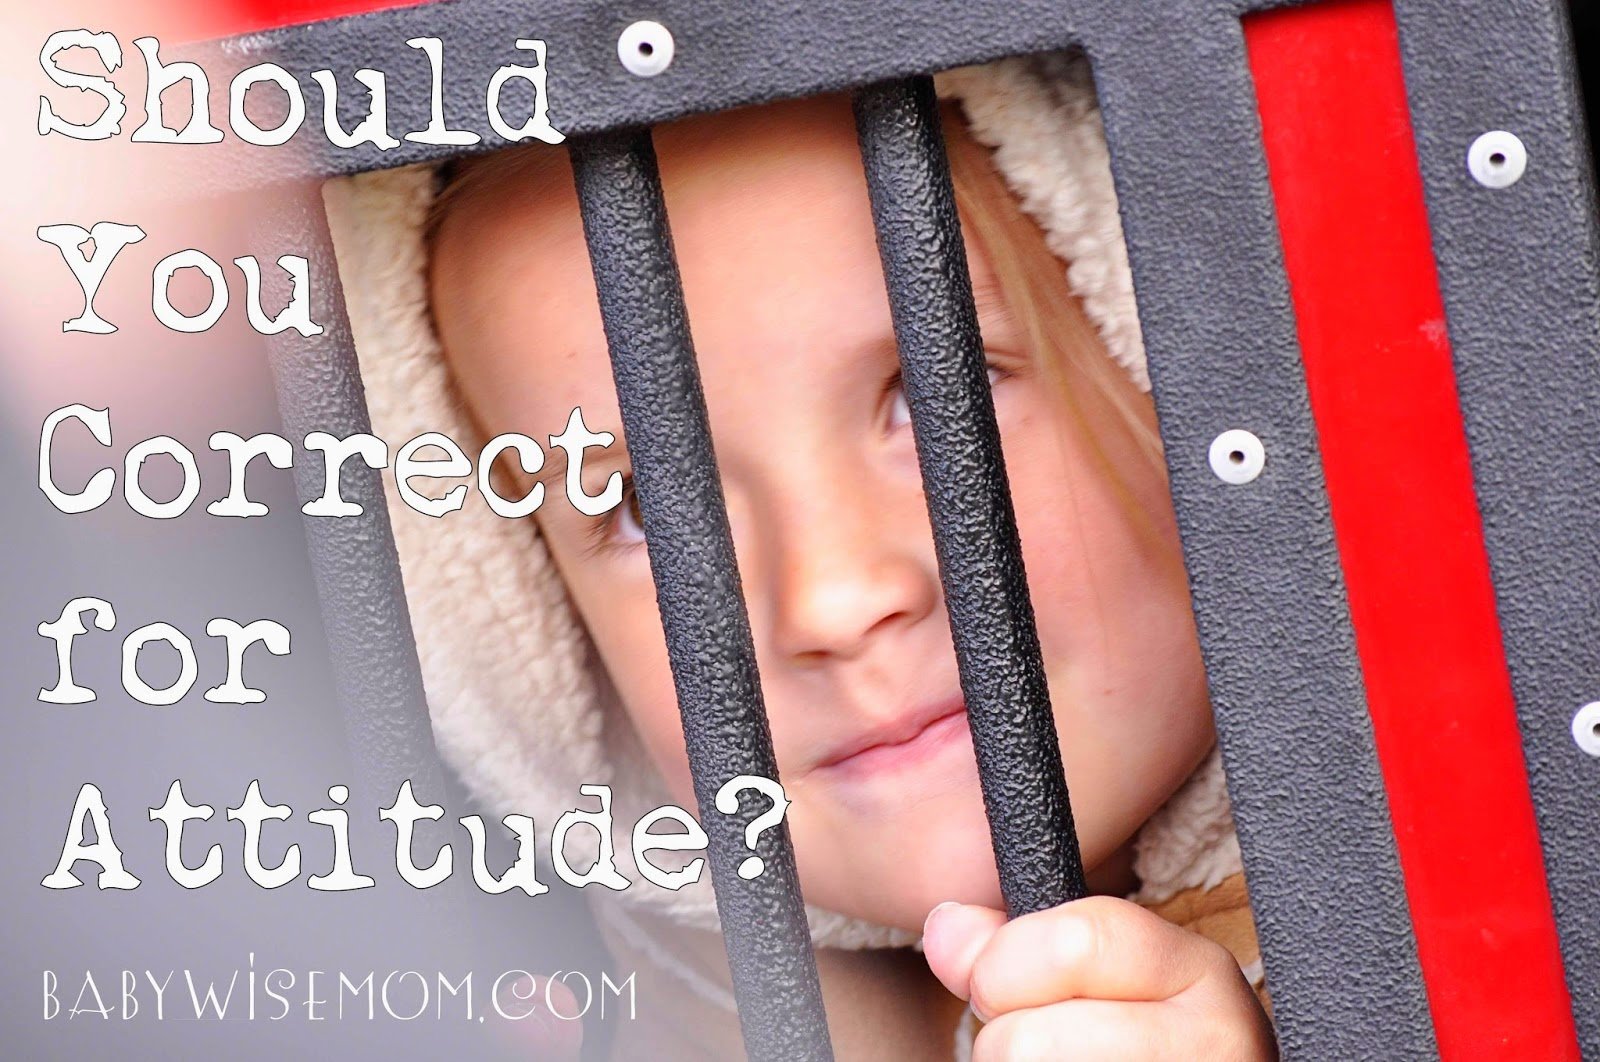 BFBN: Should You Correct for Attitude?